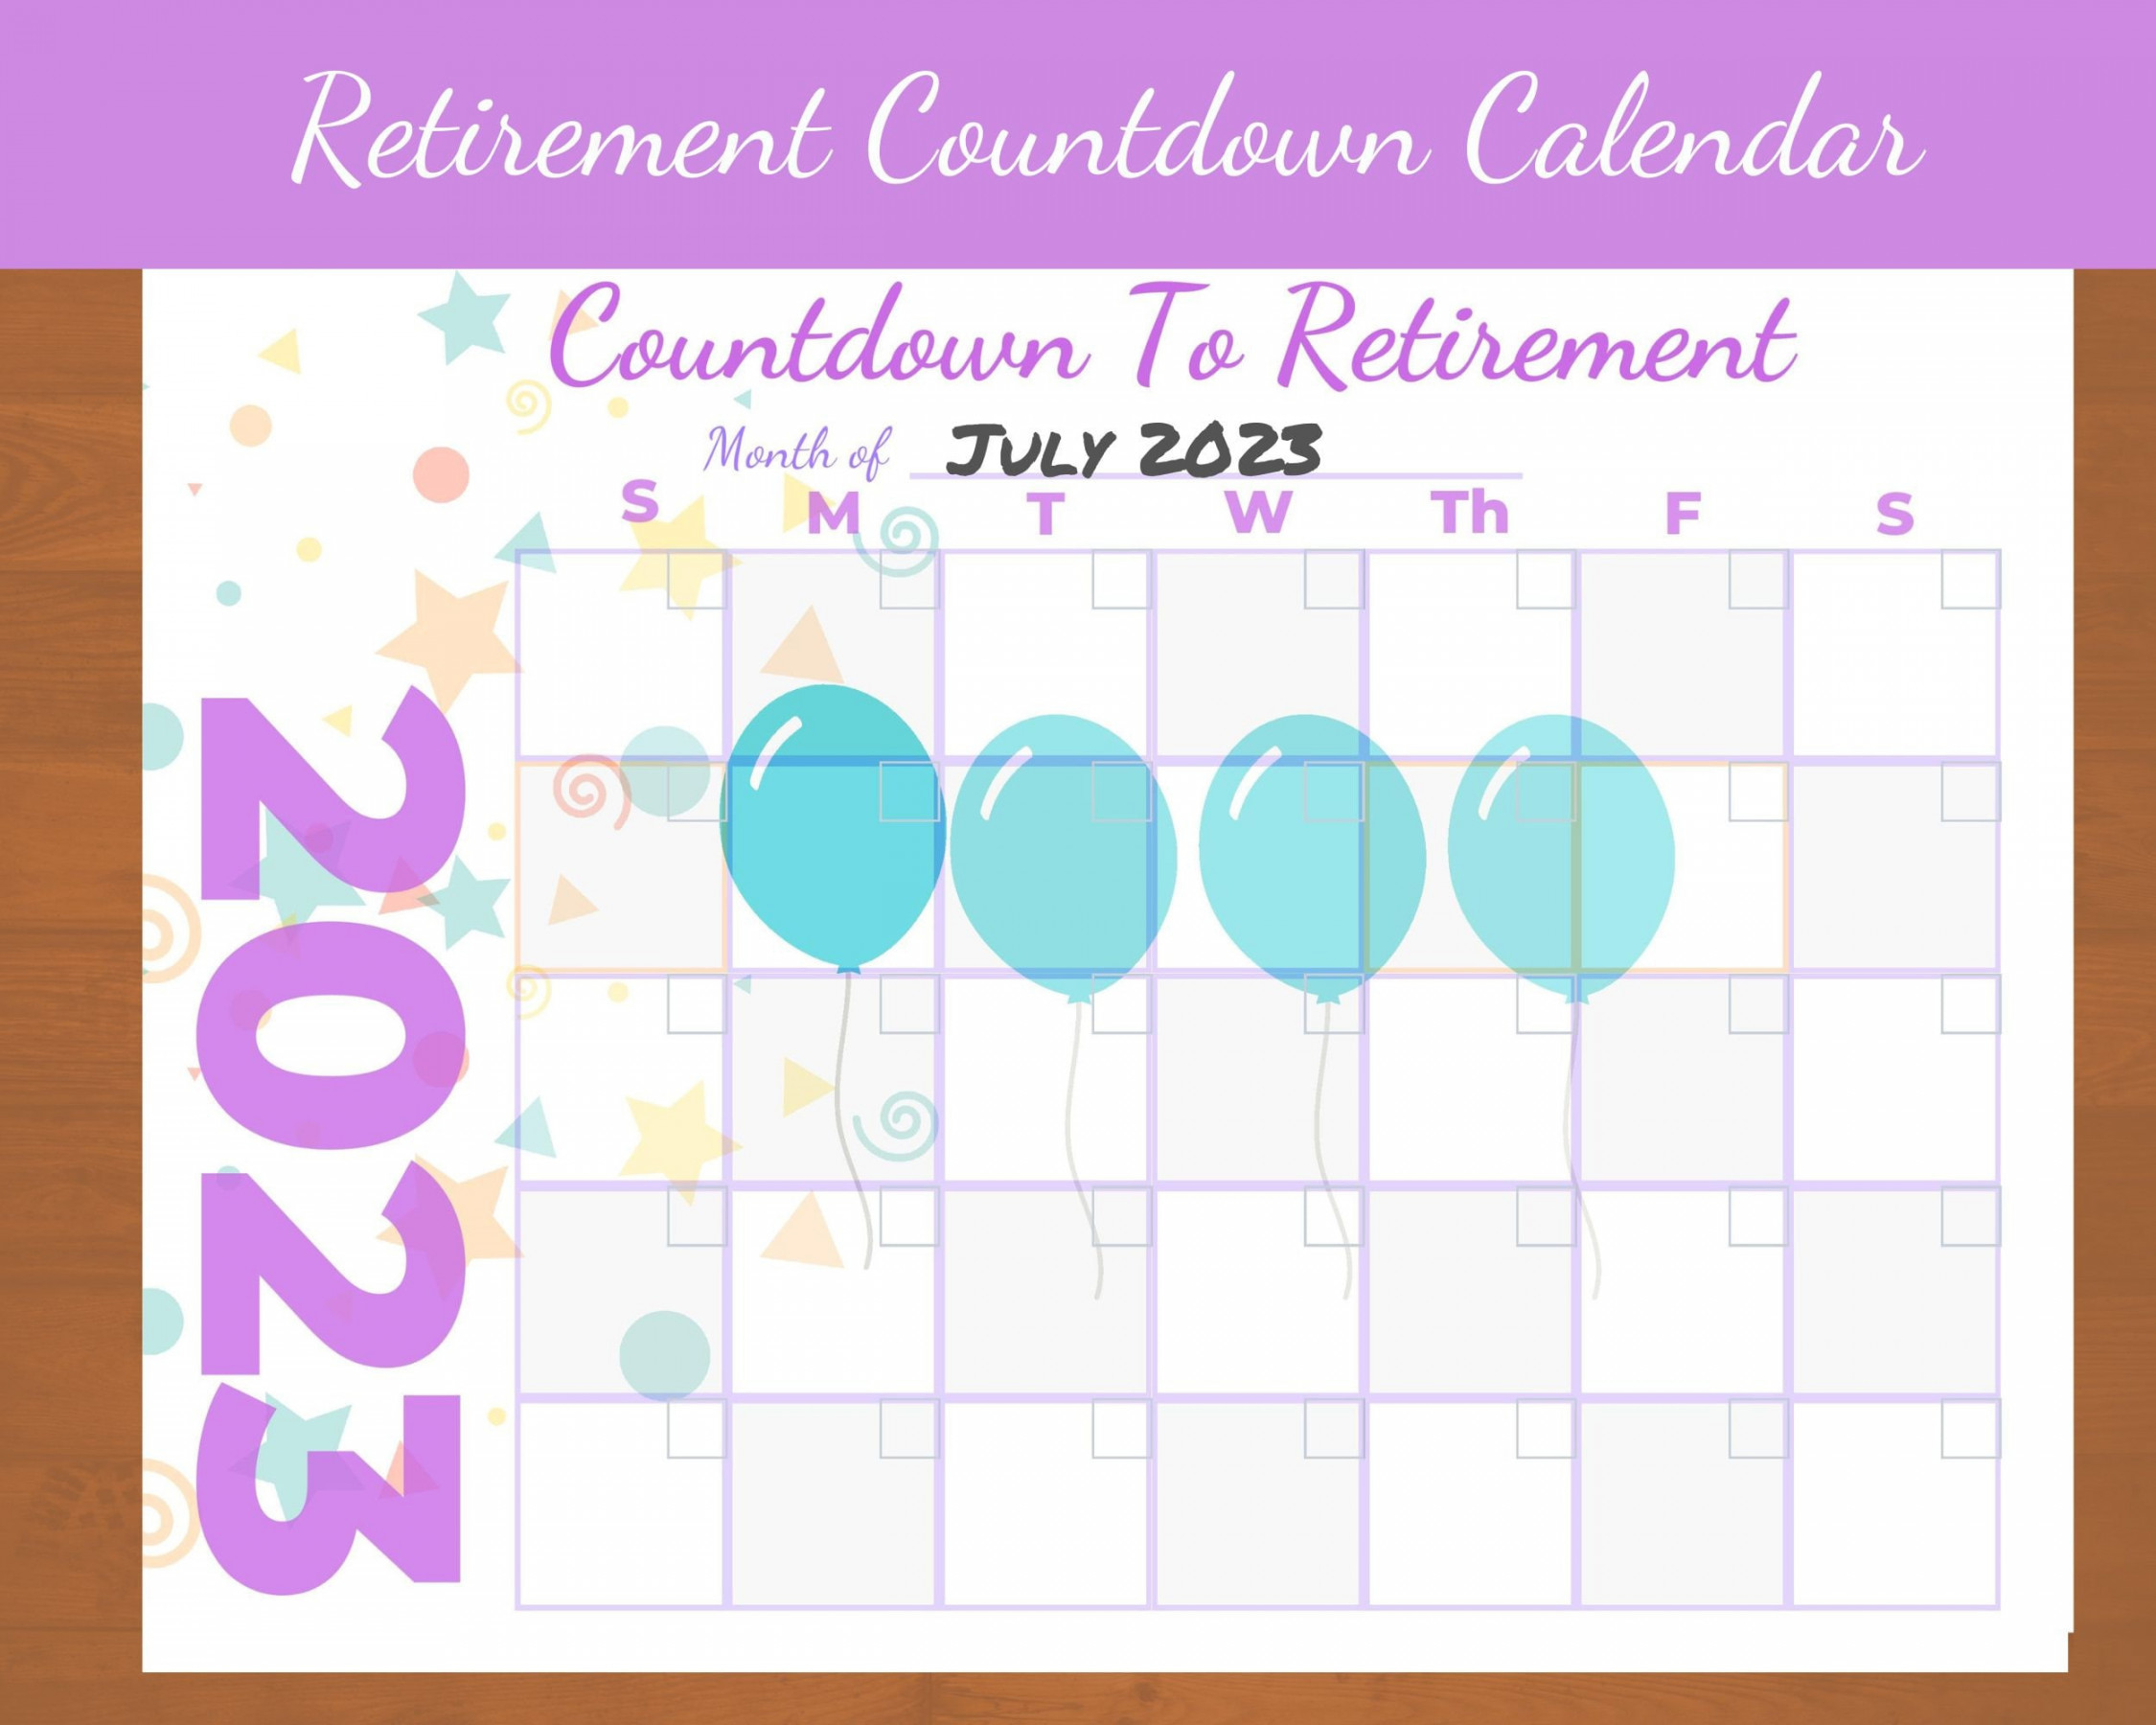 Countdown to Retirement Printable Calendar Fun Way to Count